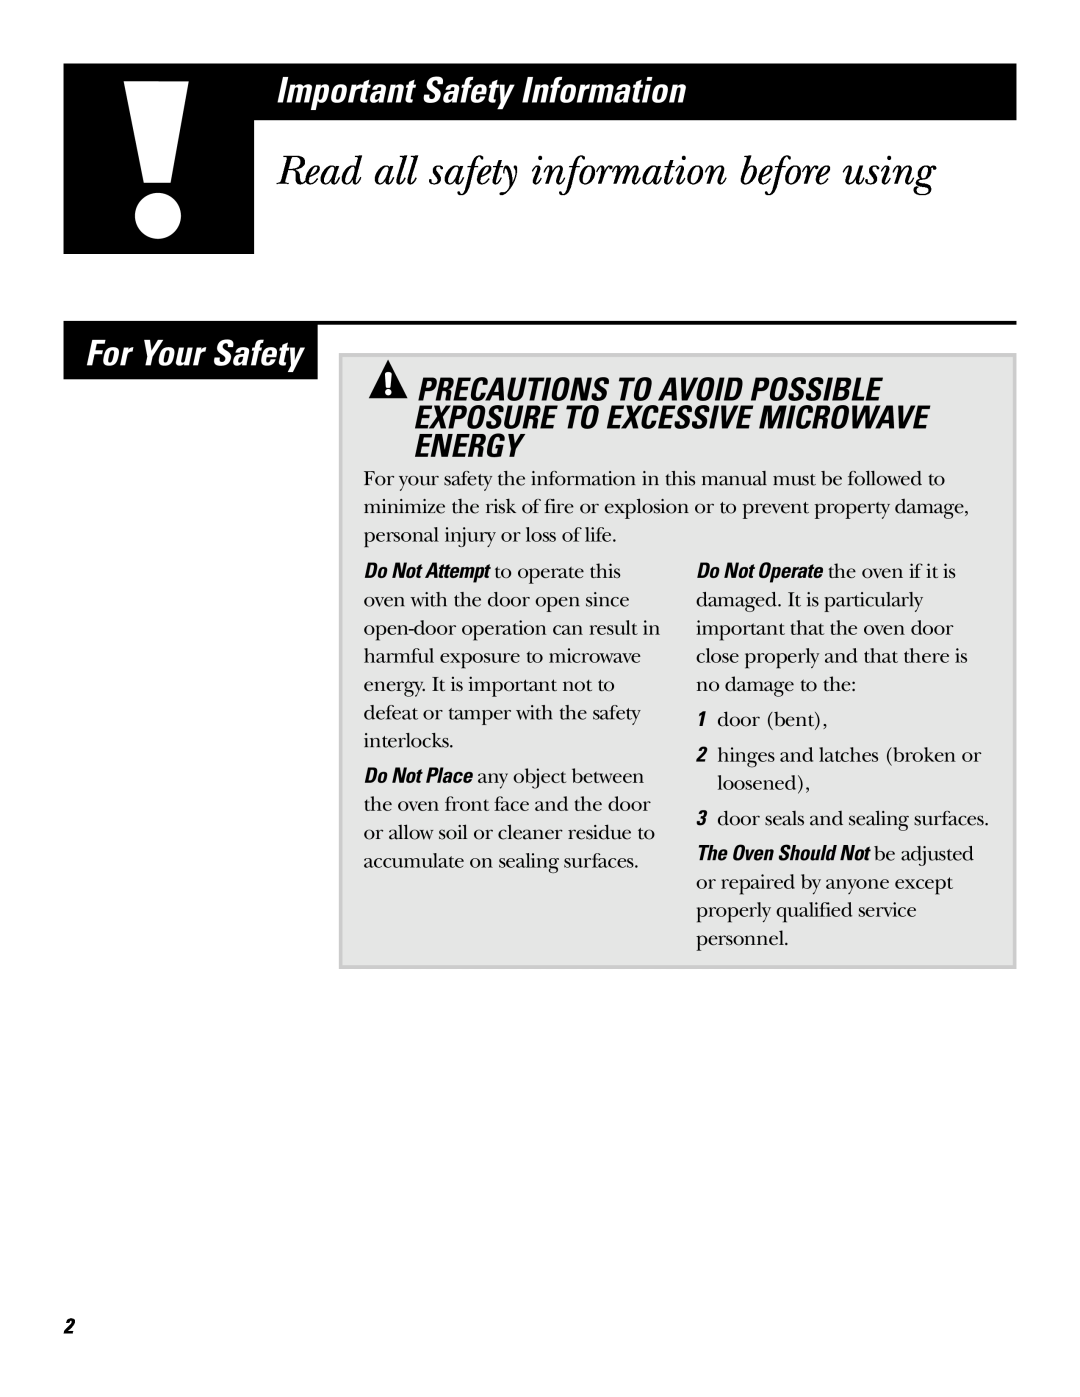 GE JE610, JE620 Read all safety information before using, Important Safety Information, For Your Safety 